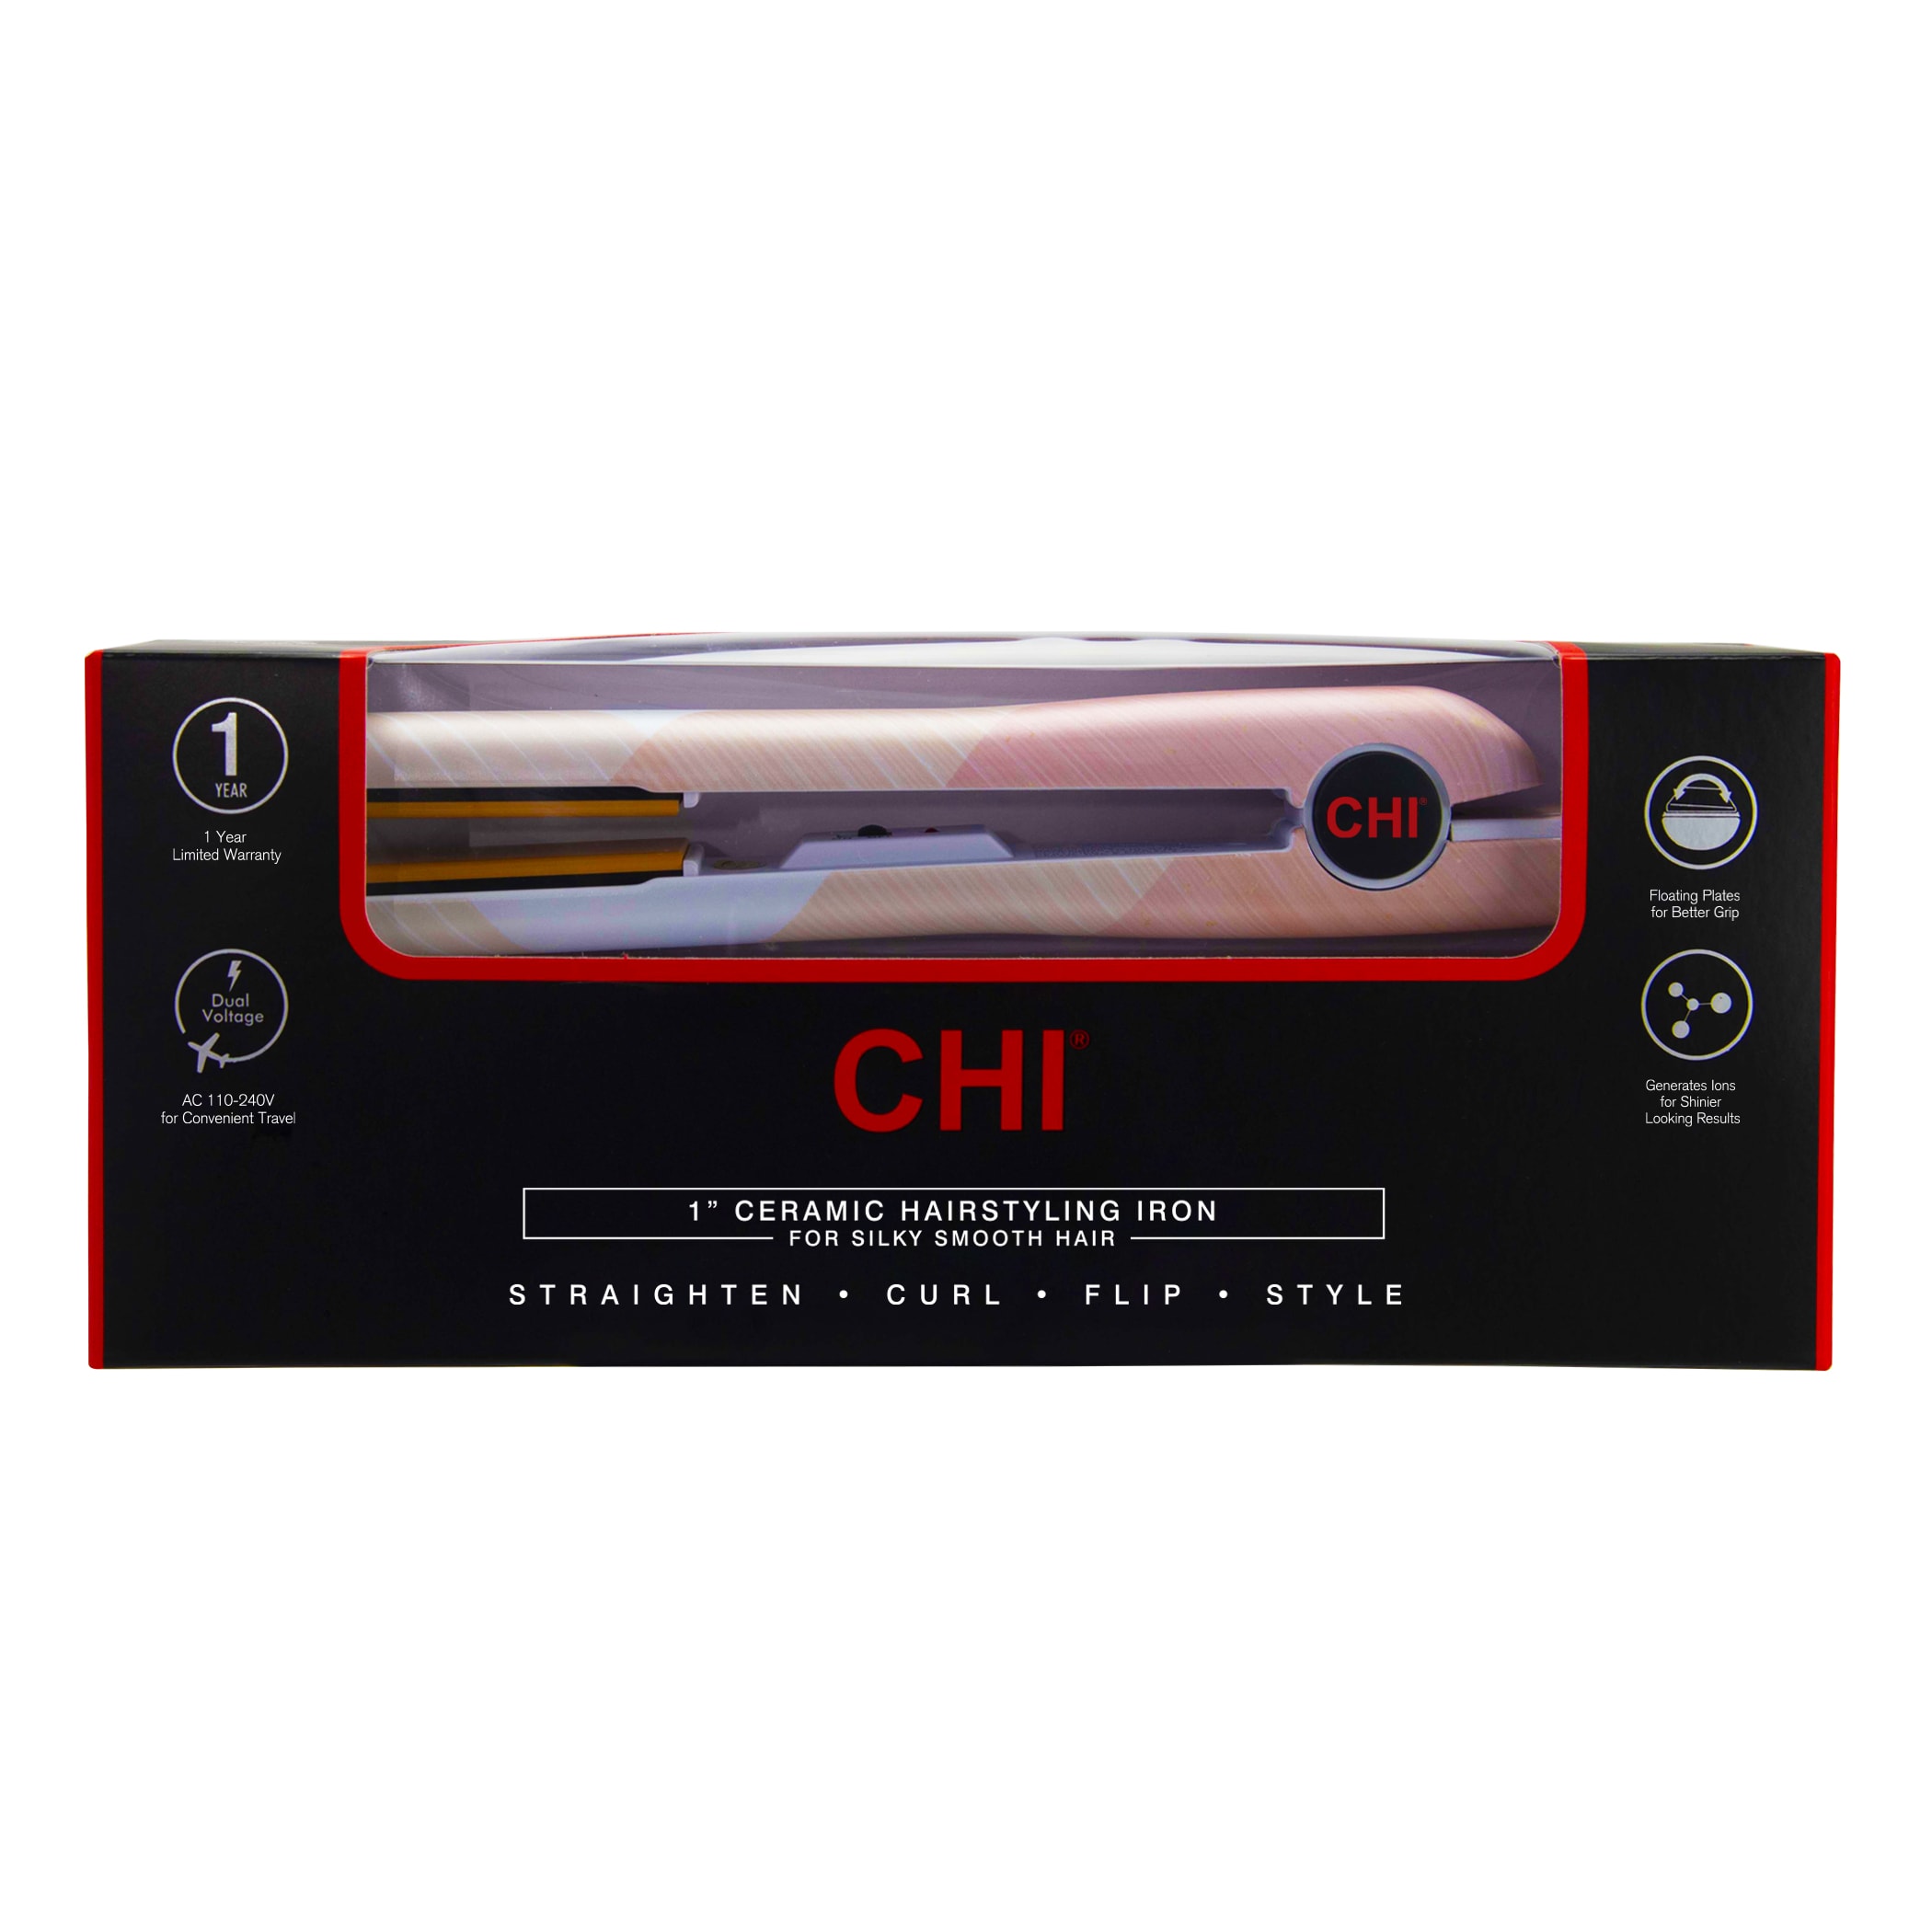 CHI 1" Tourmaline Ceramic Hairstyling Iron - image 2 of 4